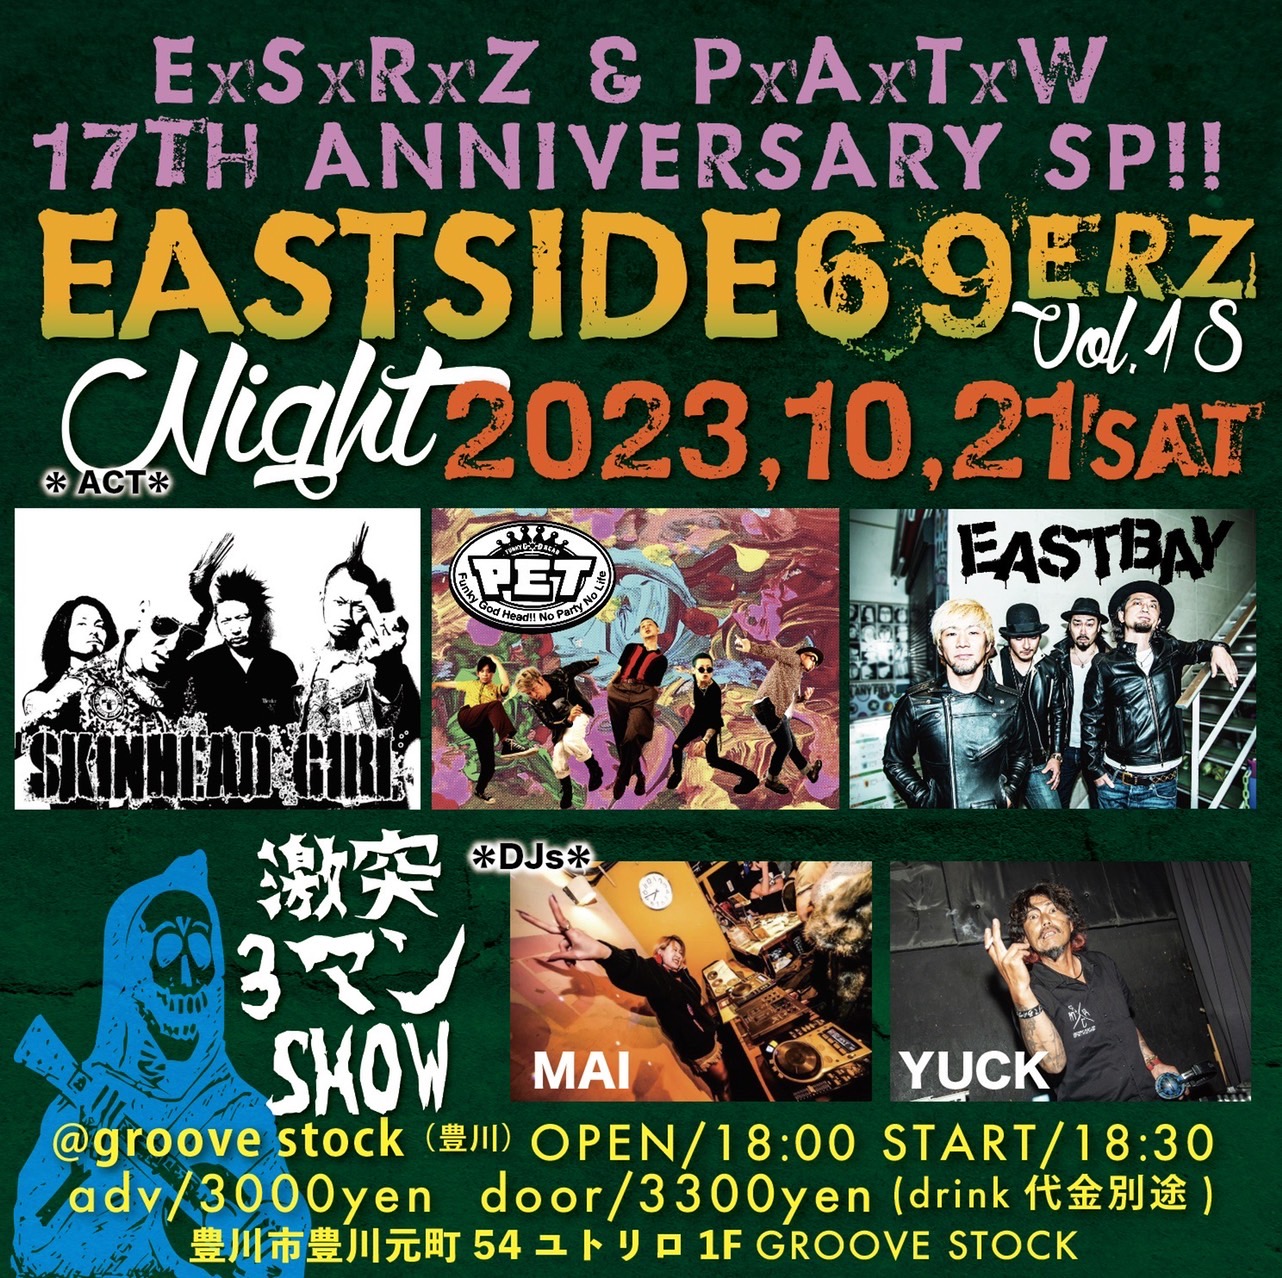 EASTSIDE69ERZ NIGHT Vol.18 ExSxRxZ & PxAxTxW 17th ANNIVERSARY SP!!【激突3マンSHOW】の写真